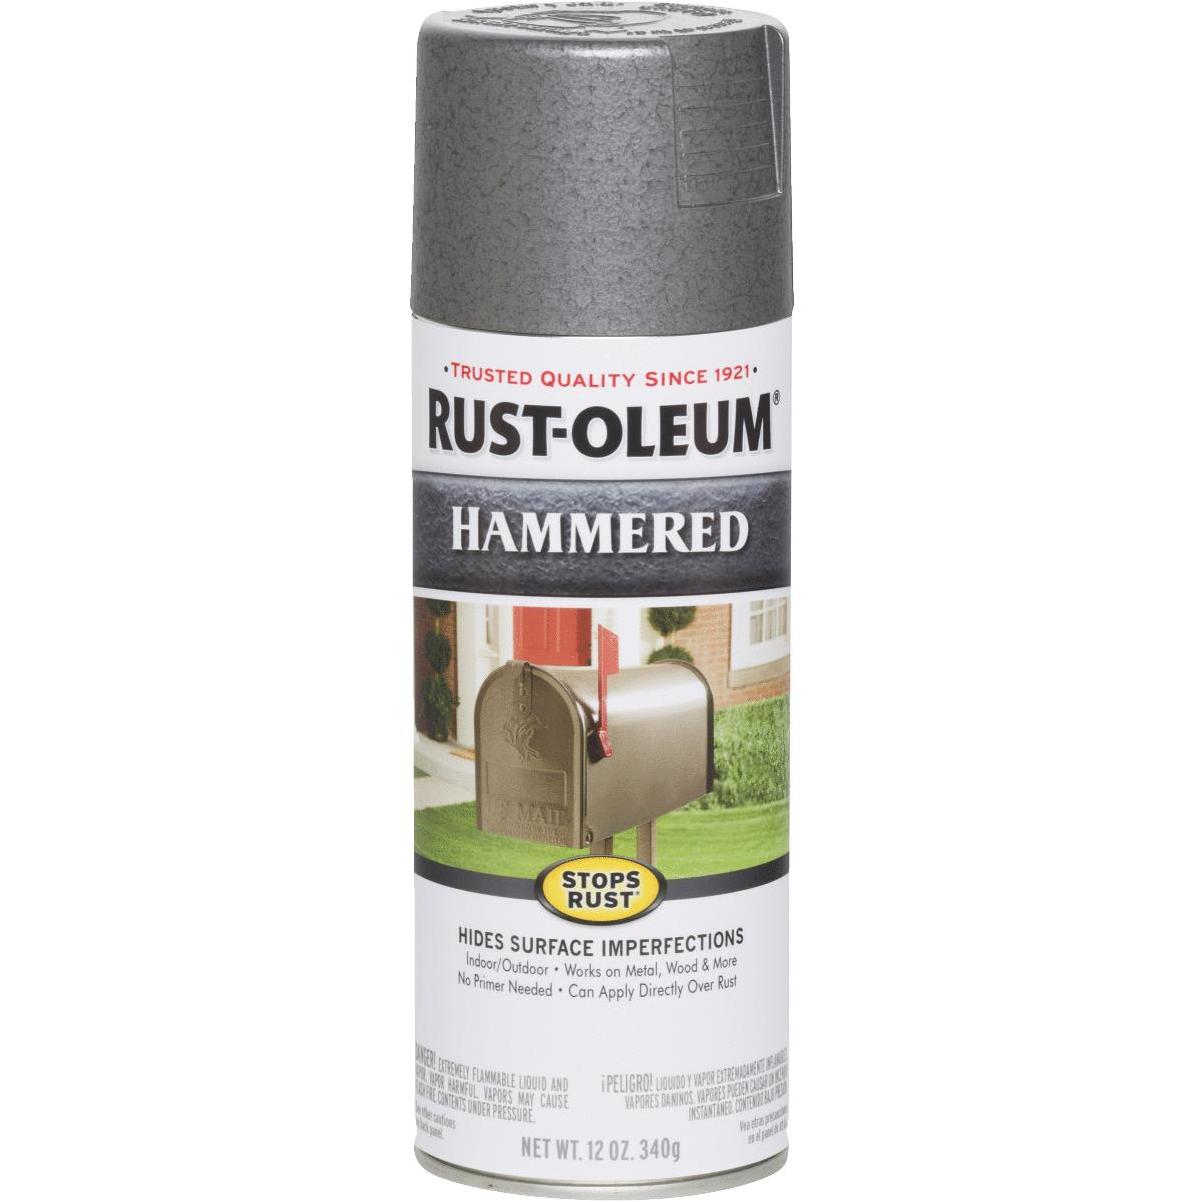 Rust-Oleum Specialty Metallic Spray Paint, Gold, 12-oz.